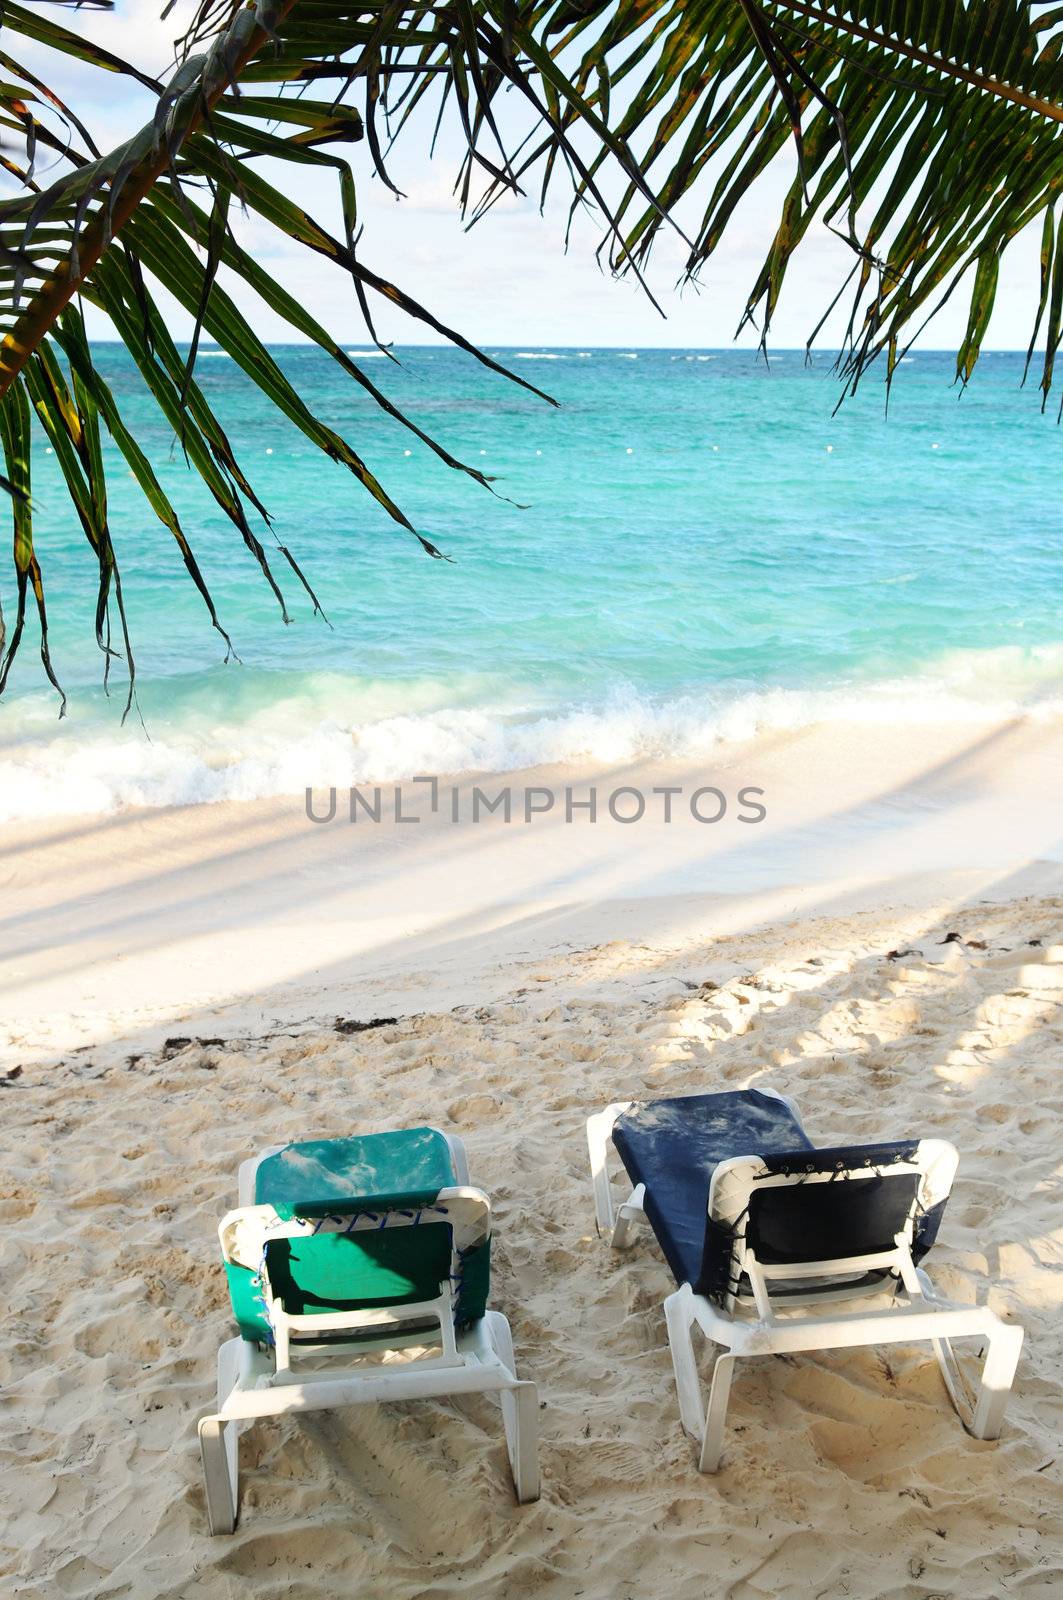 Sandy beach of tropical resort by elenathewise